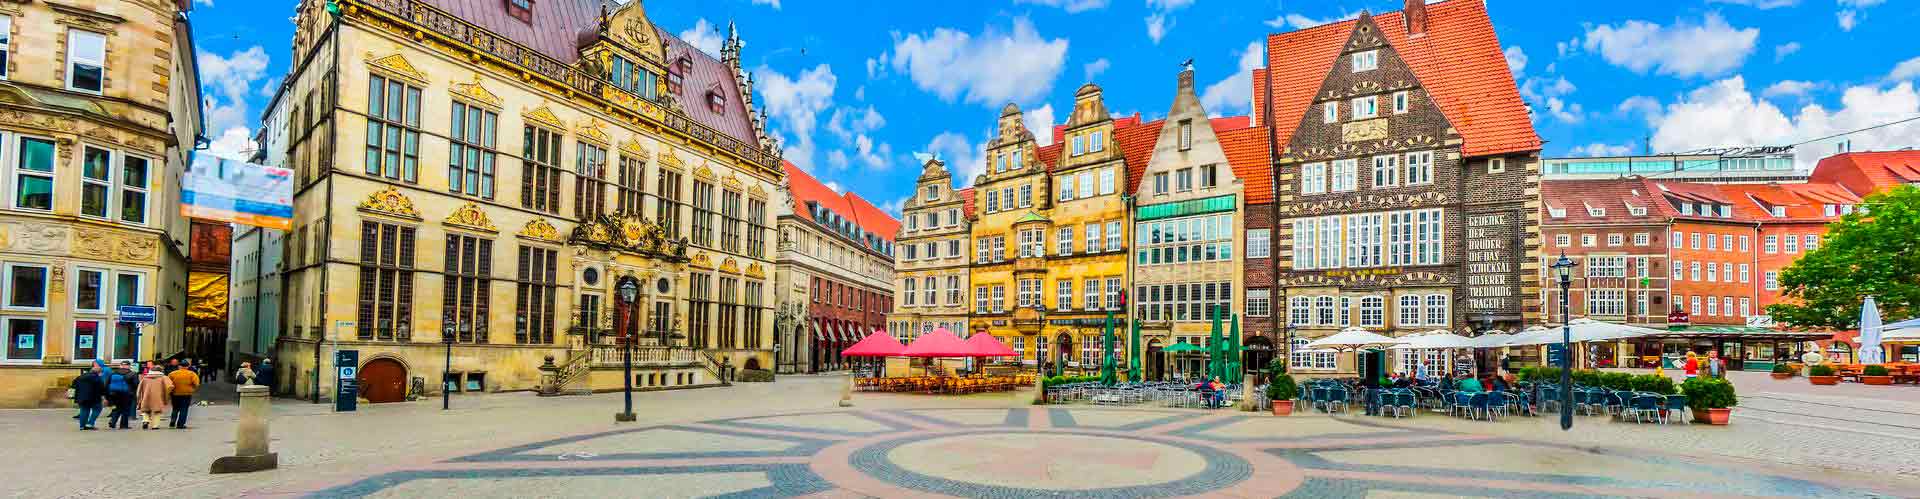 Free Tour Bremen - Turismo de Alemania